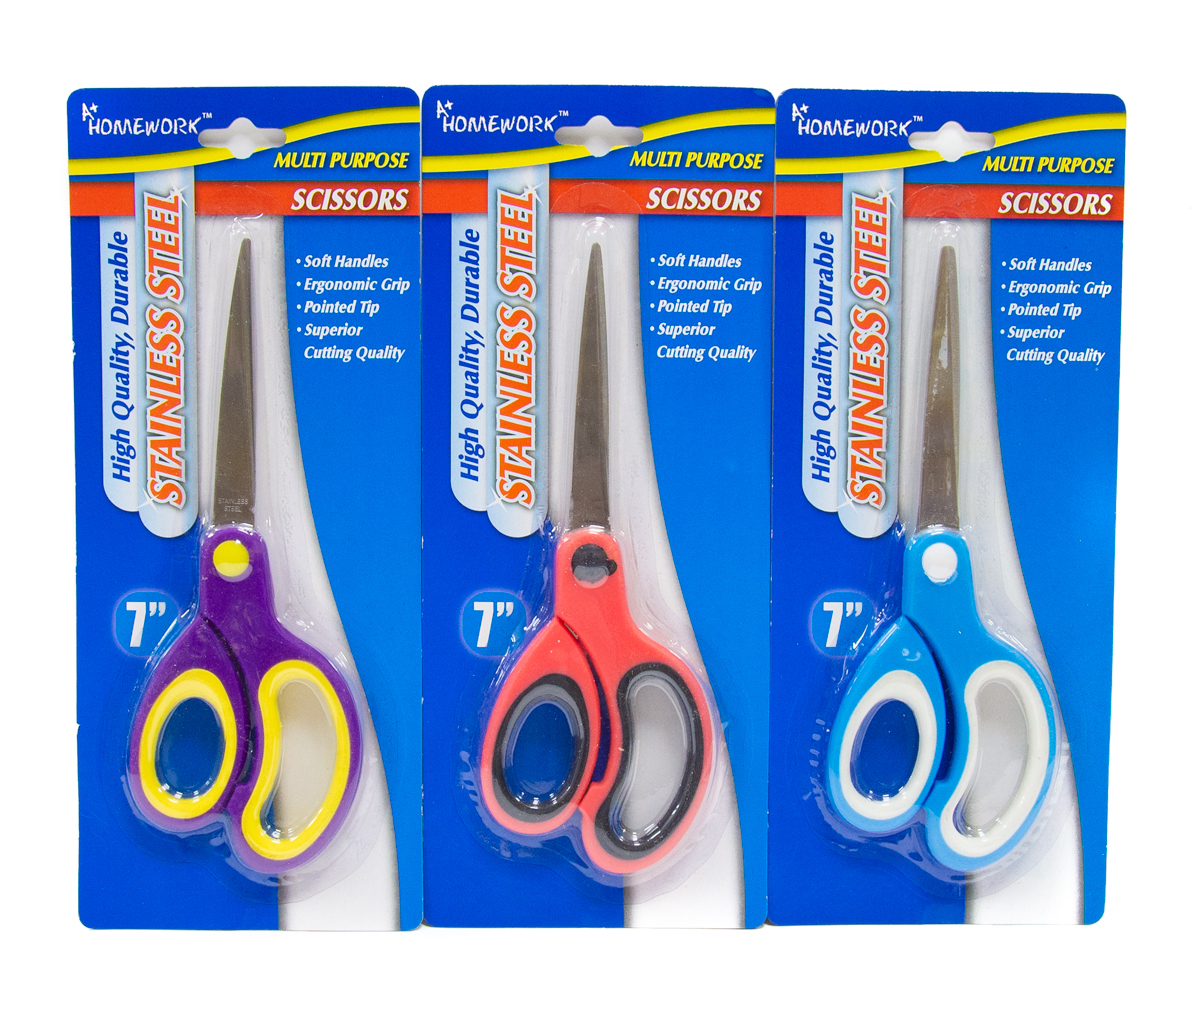 7 All-Purpose Scissors - Assorted Colors, Single Pack